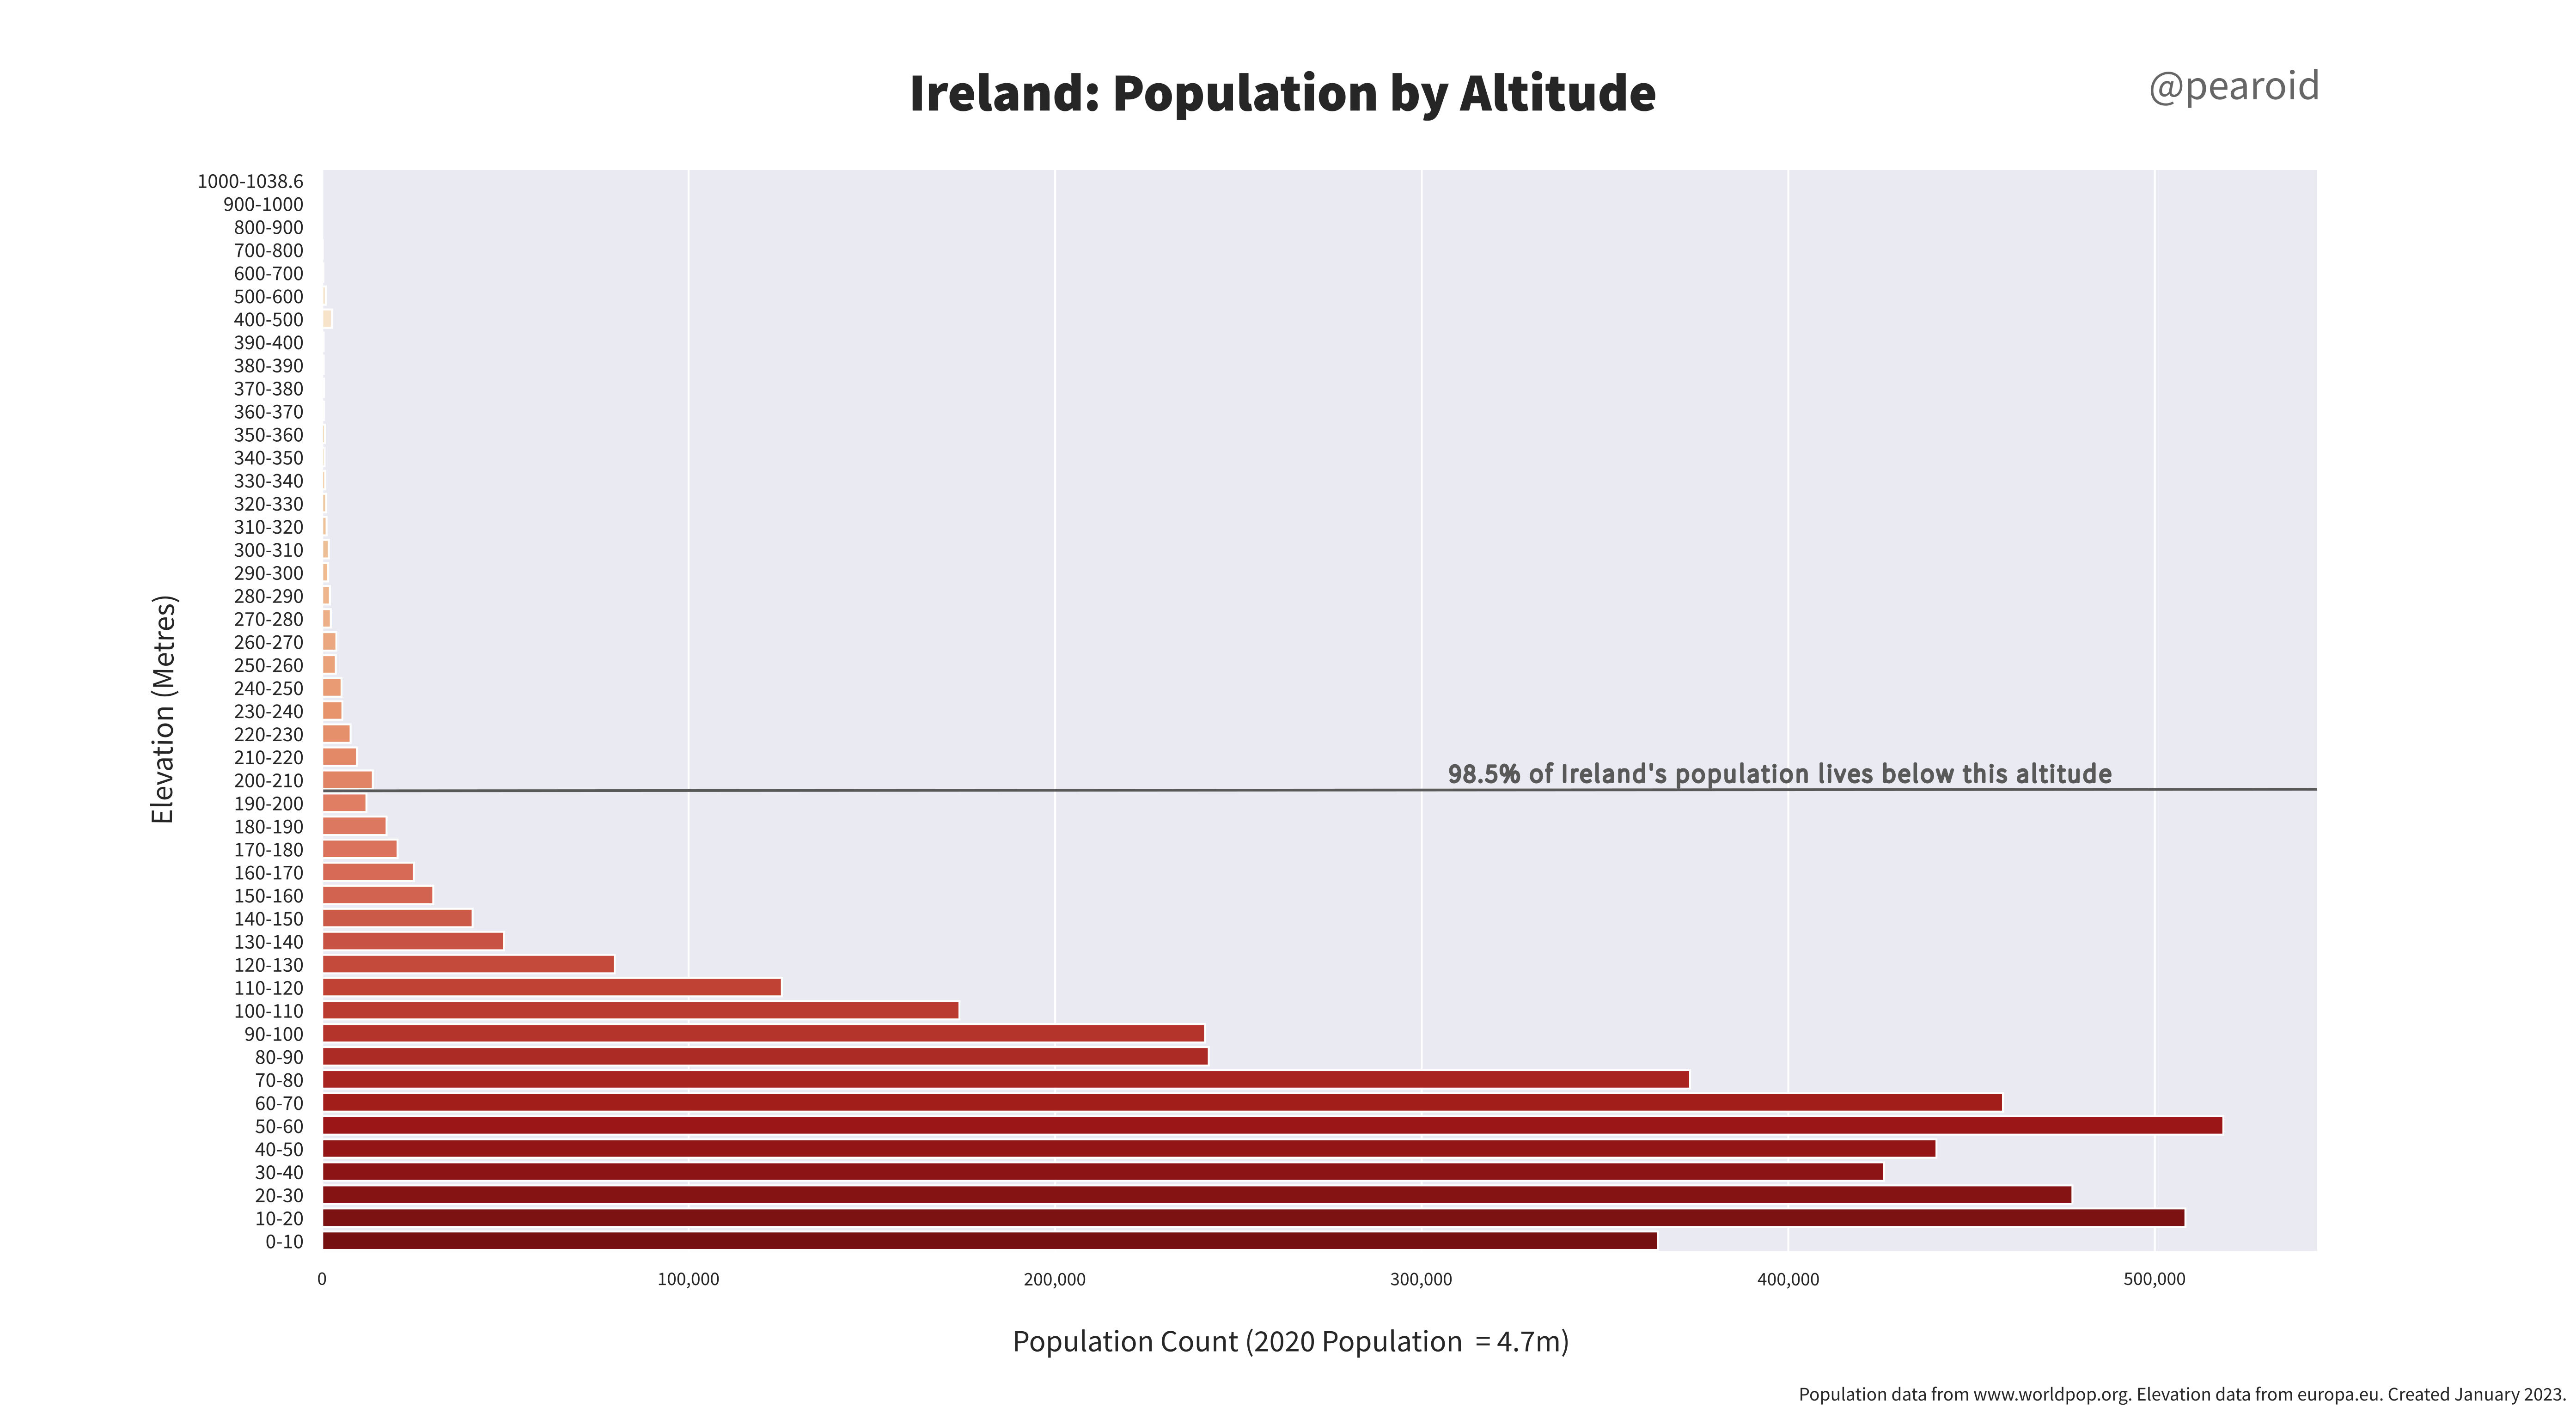 Horizontal bar plot showing Ireland's population by altitude